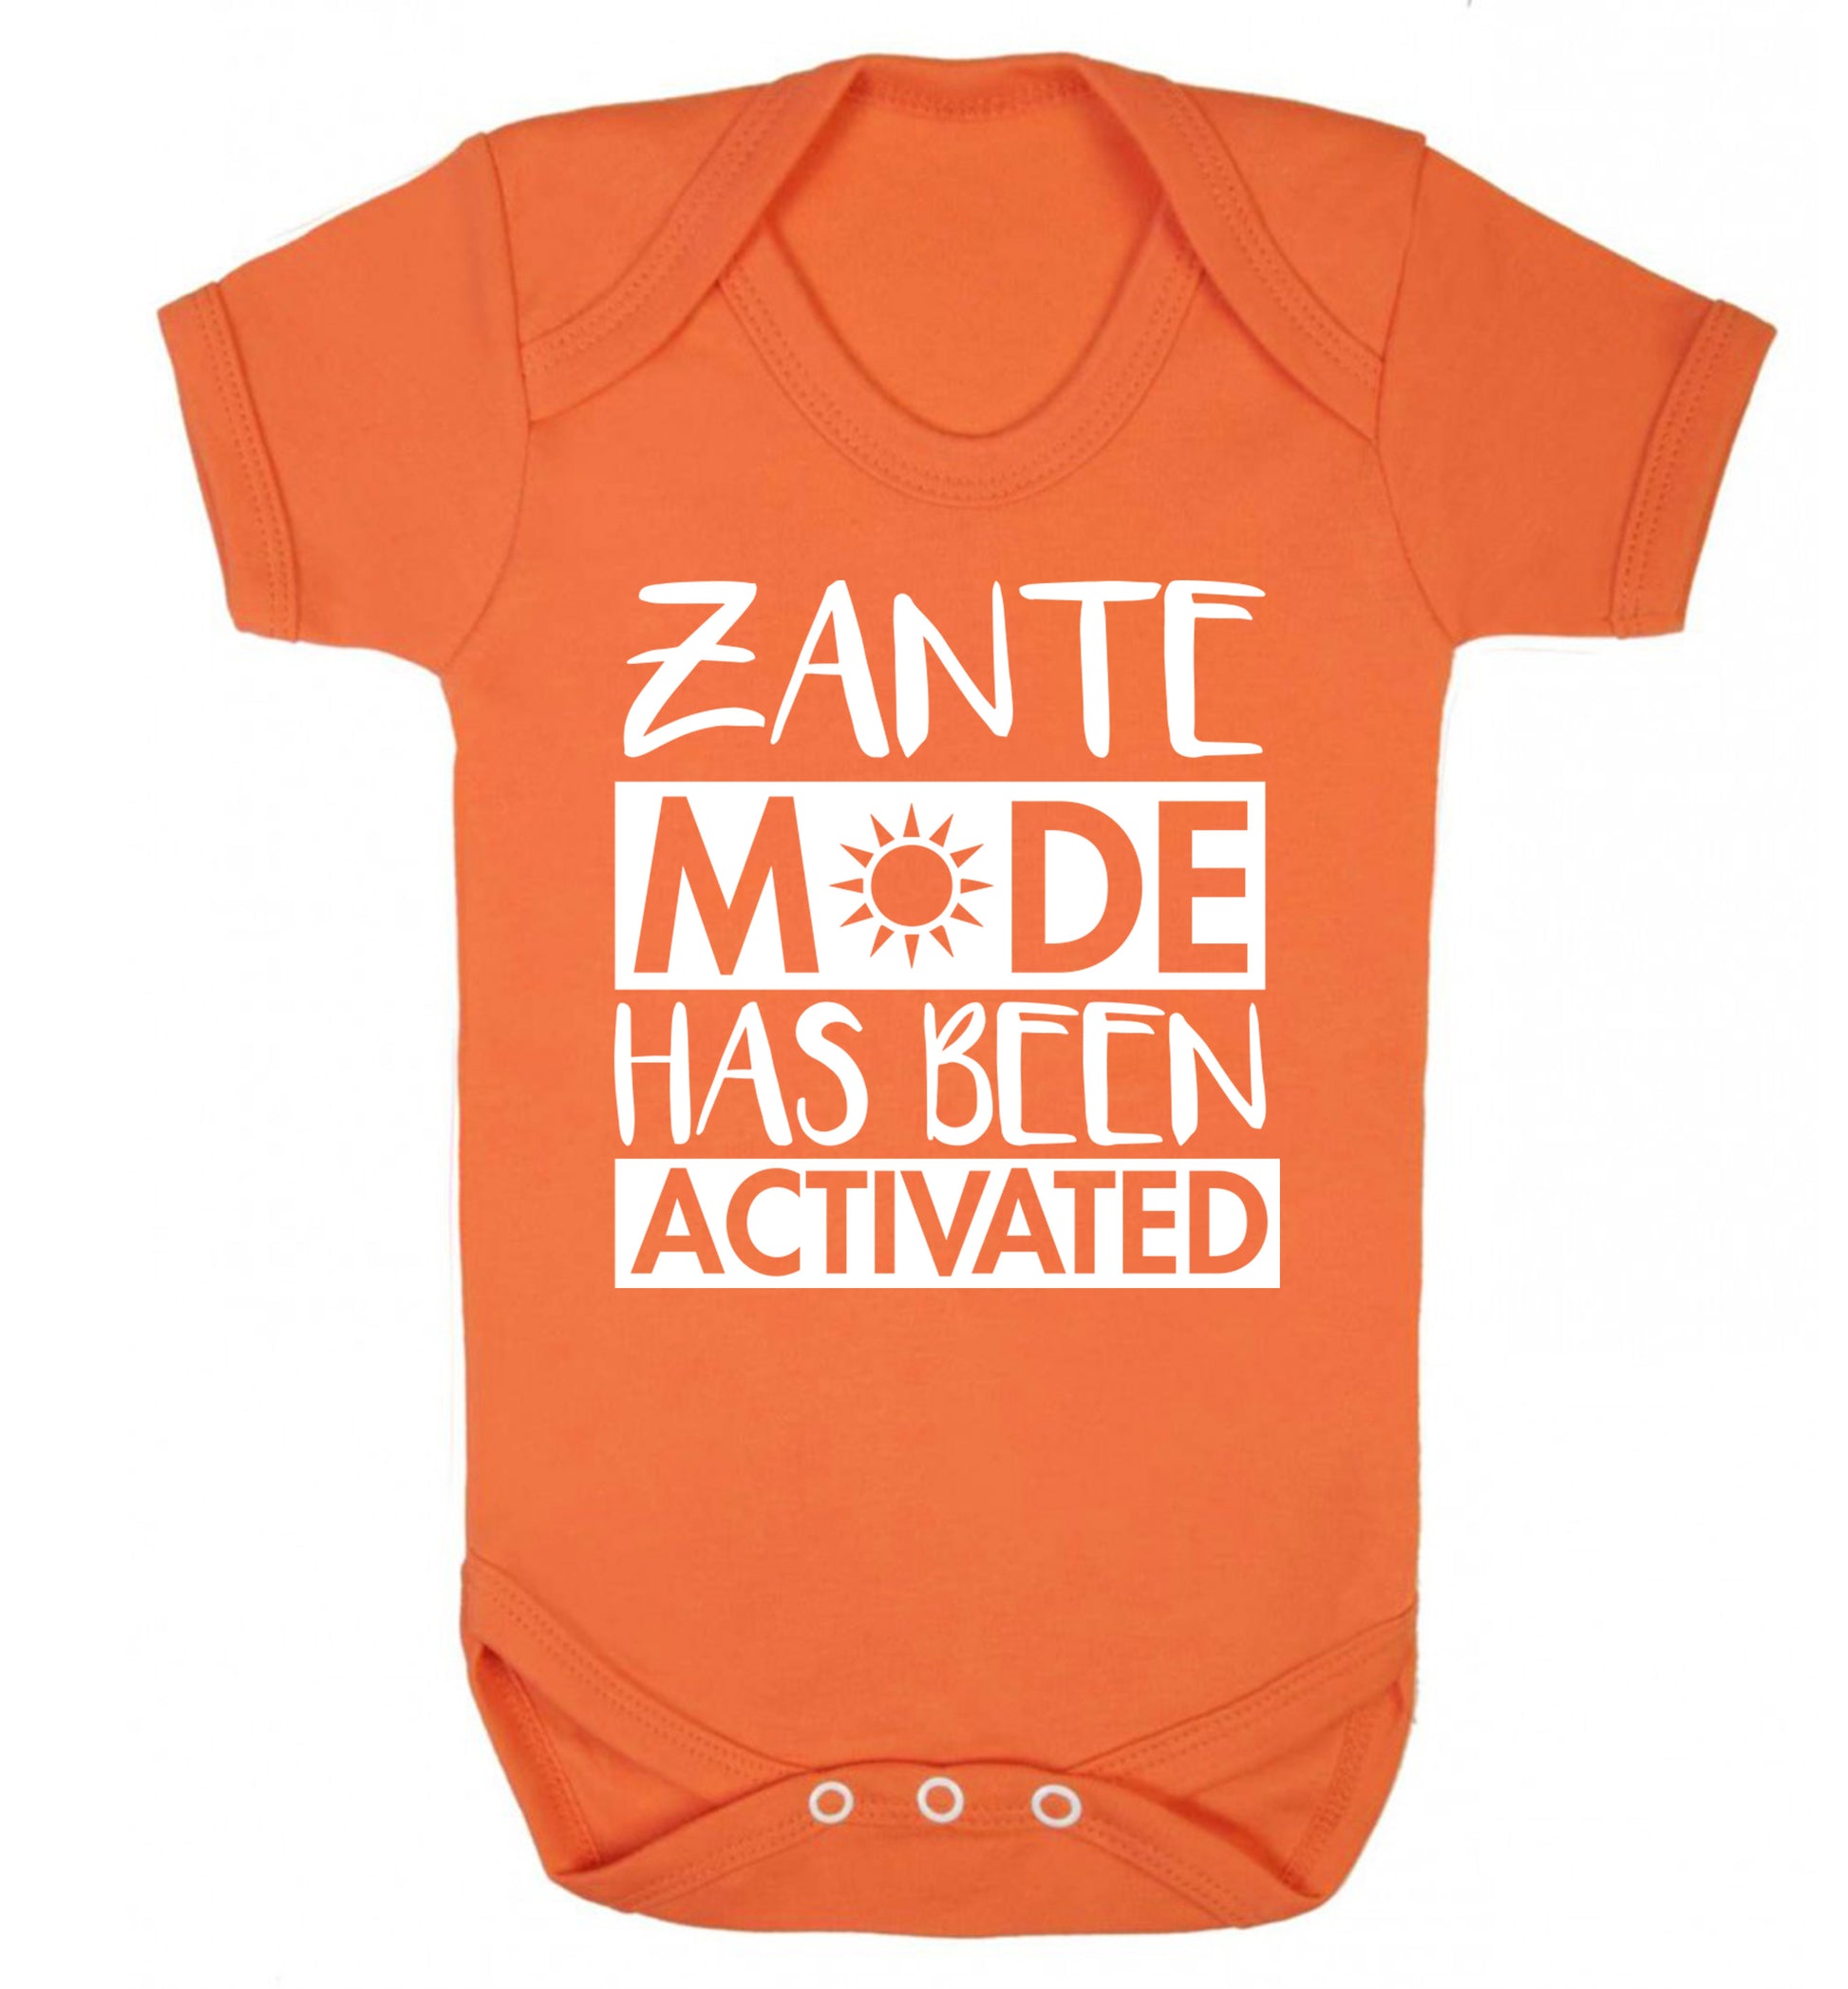 Zante mode has been activated Baby Vest orange 18-24 months